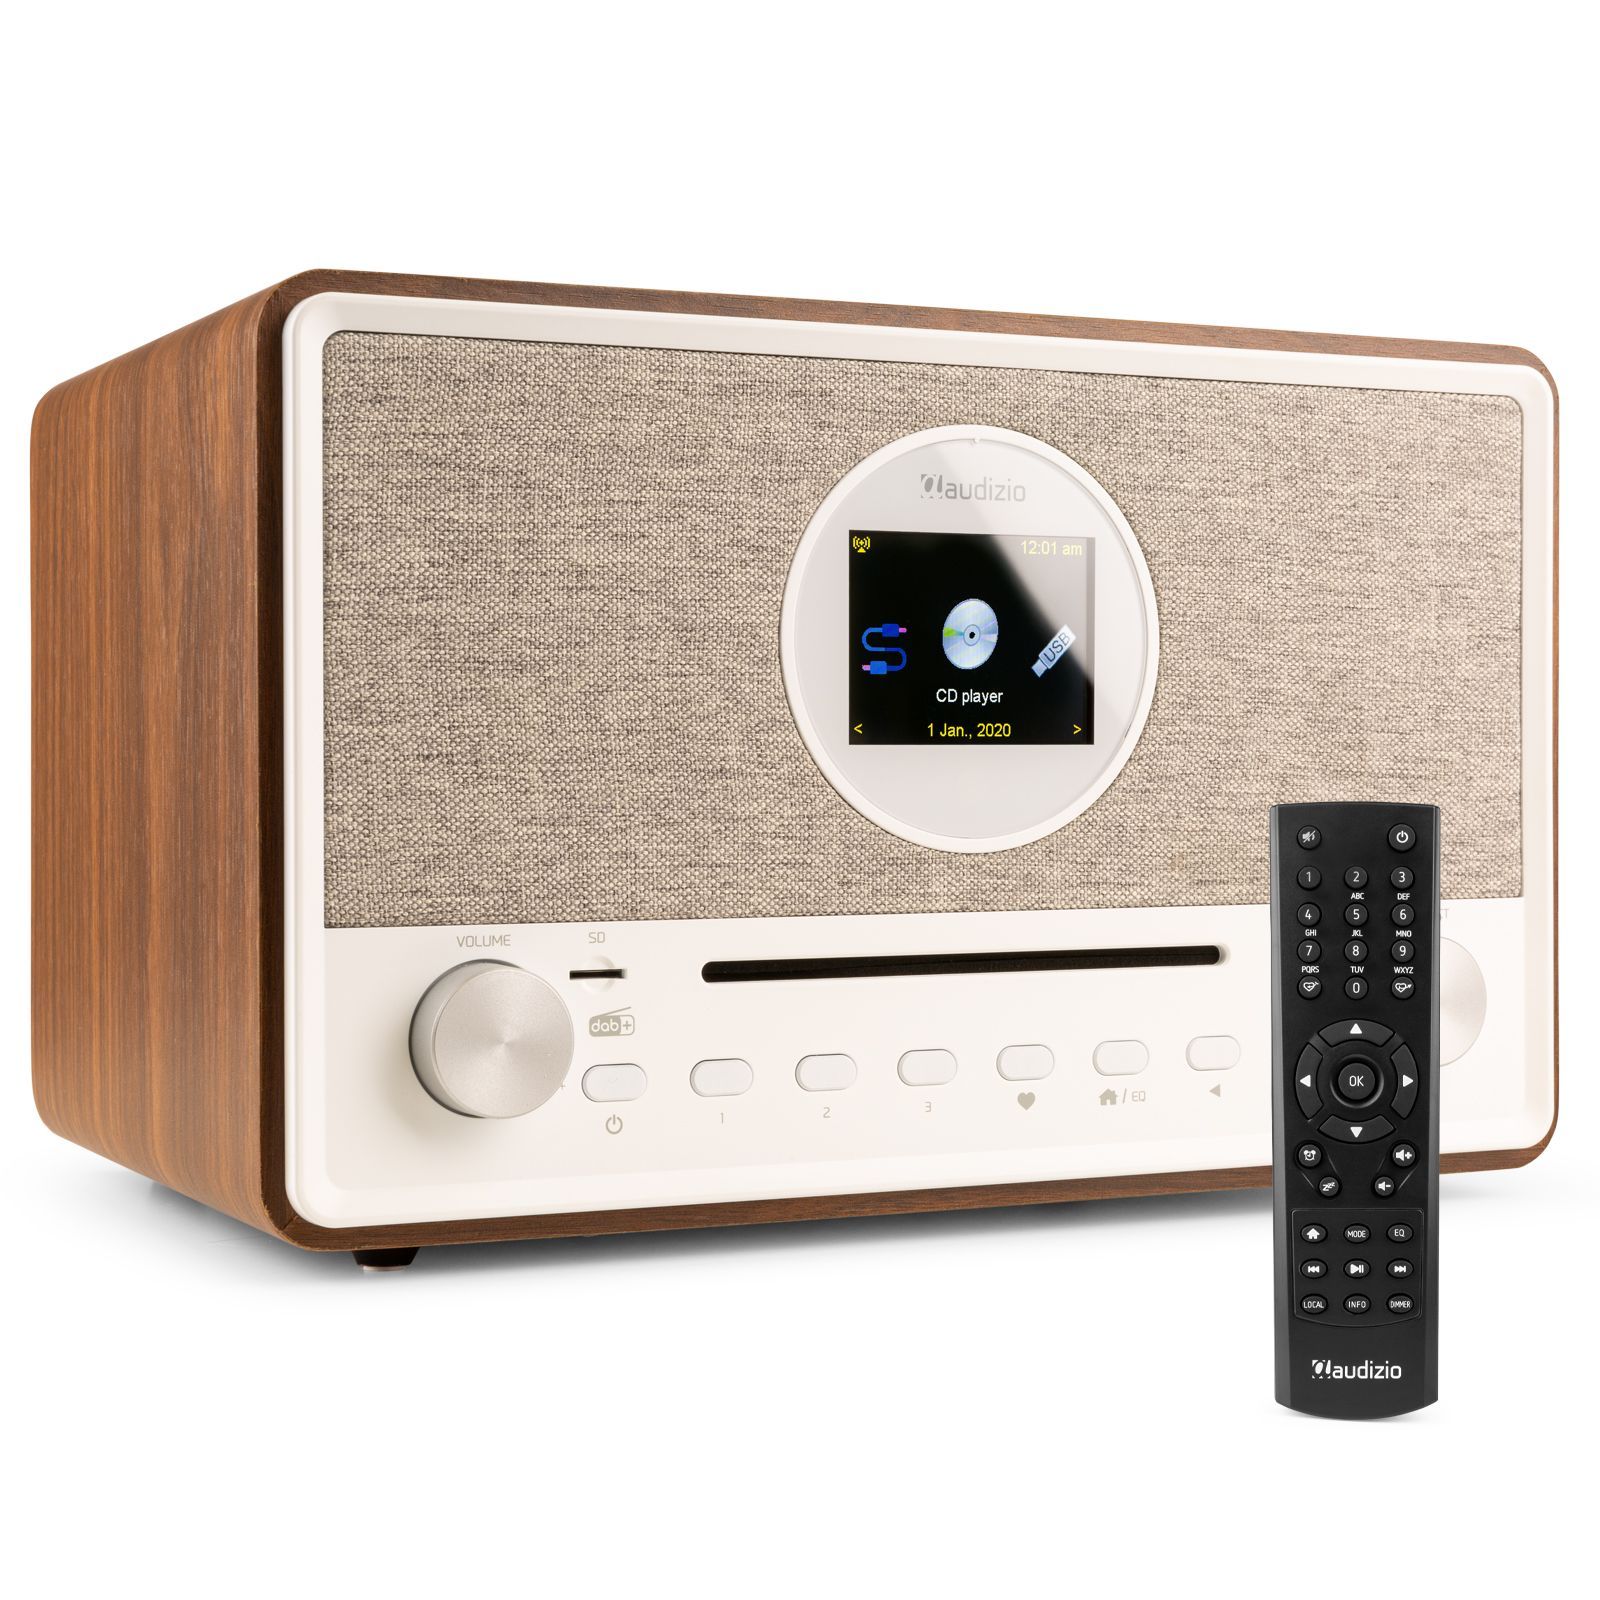 Audizio Lucca stereo DAB radio met internetradio, Bluetooth en speler - Bruin kopen?